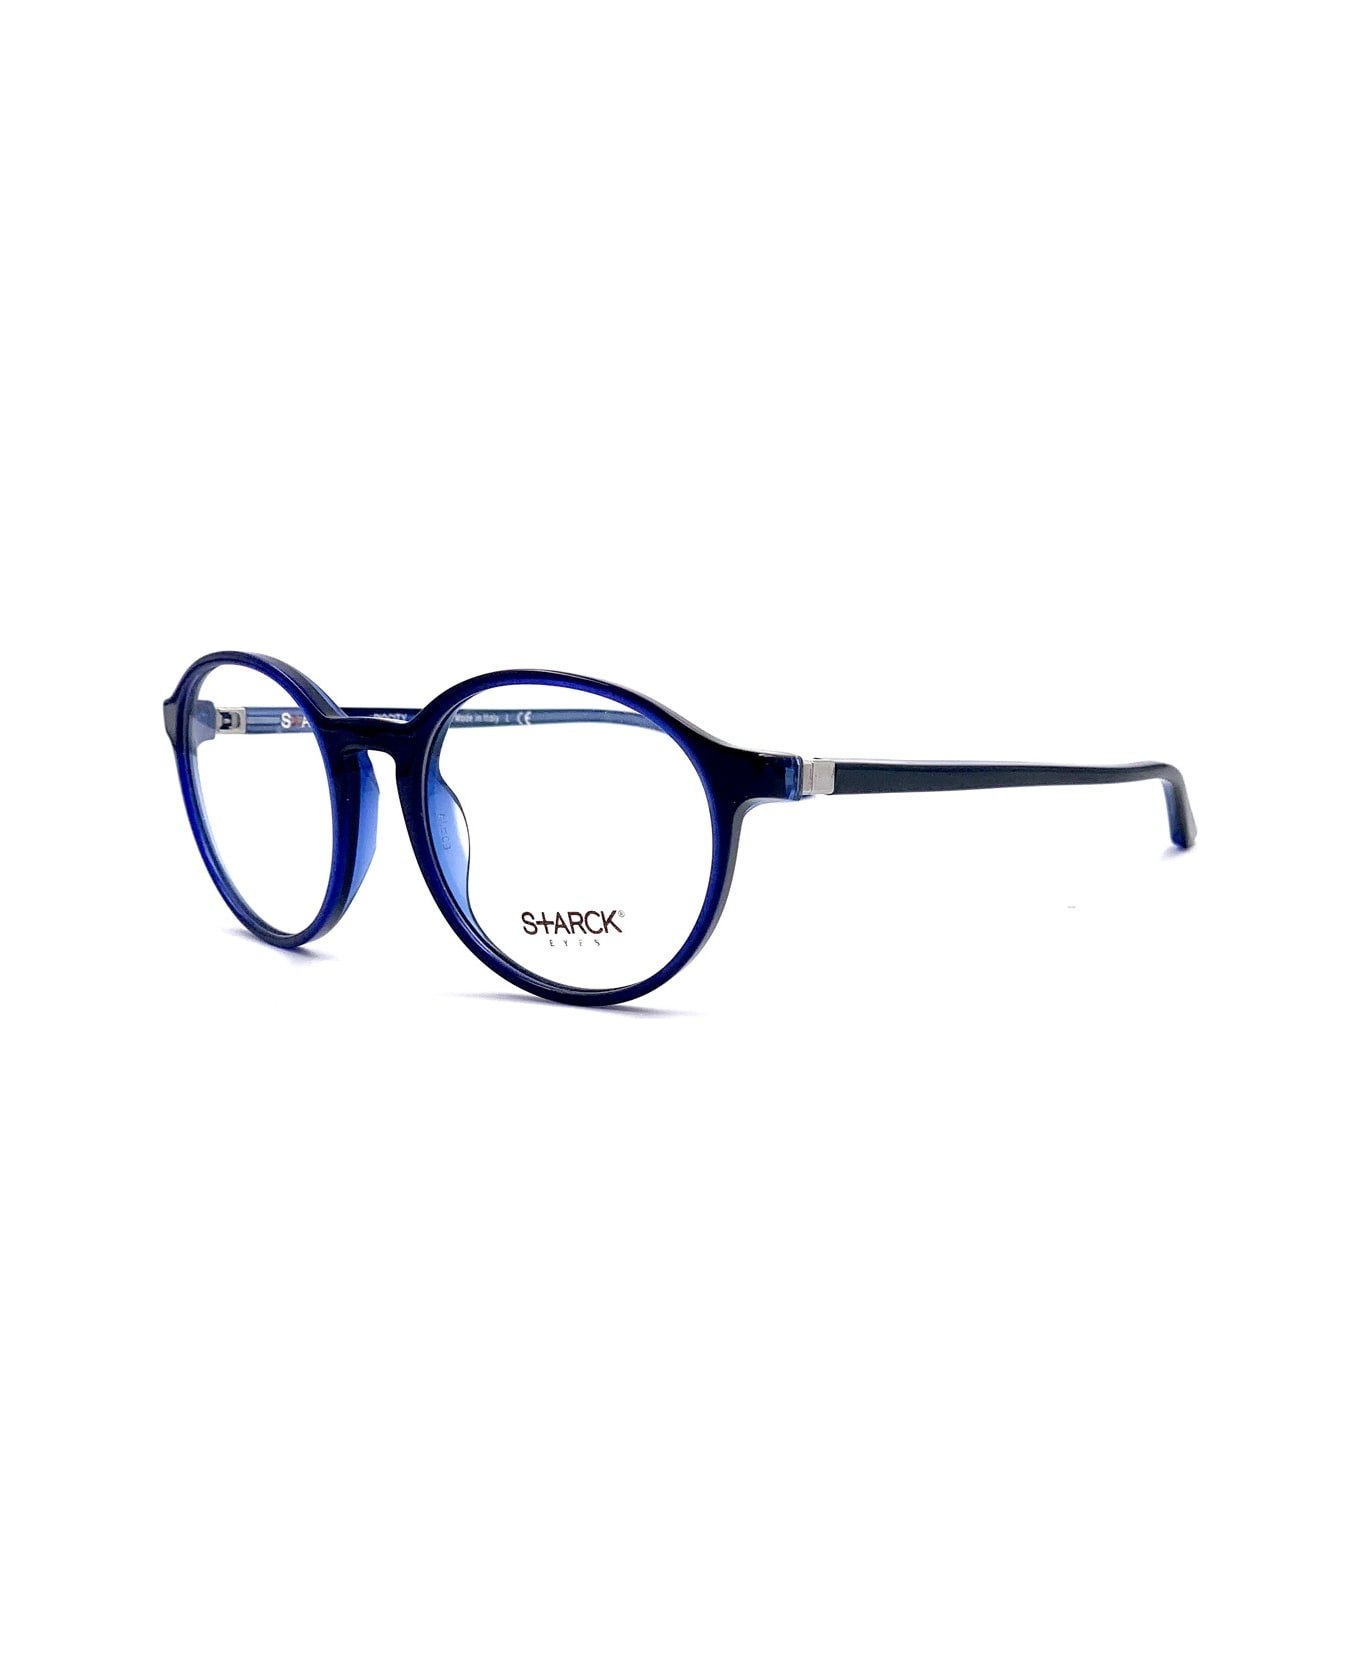 Philippe Starck 3035 Vista Glasses - Blu アイウェア